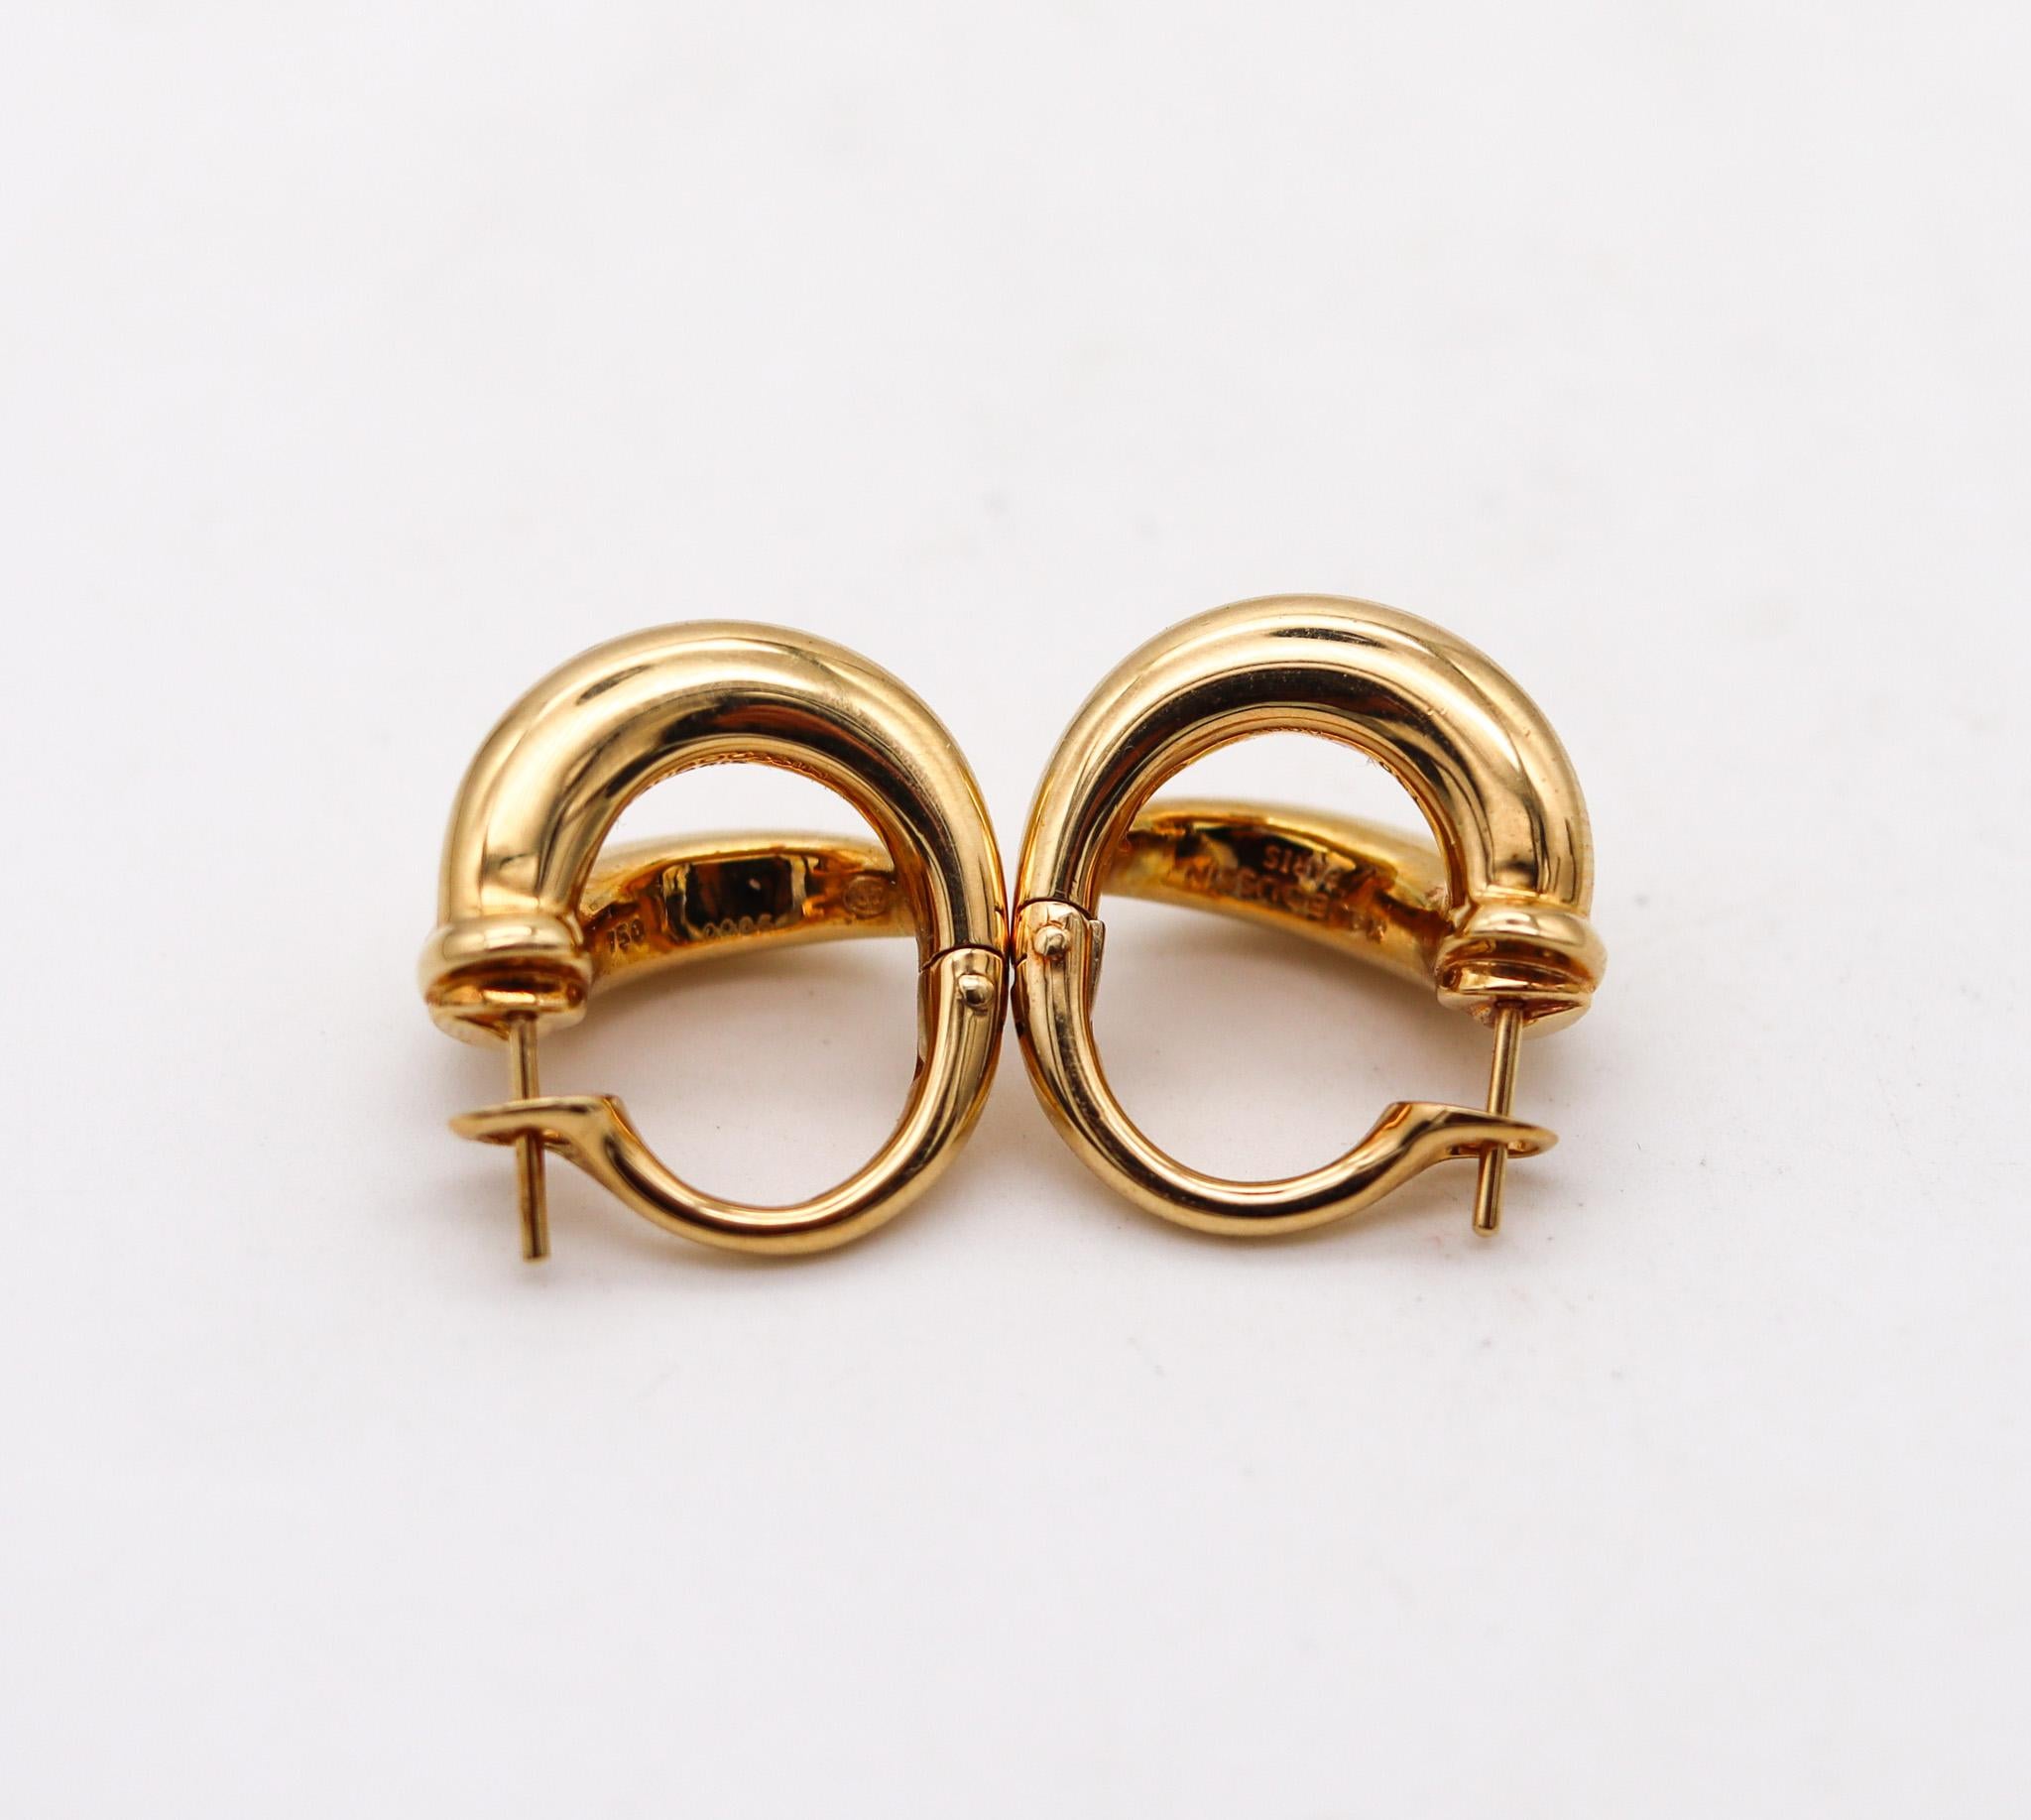 Women's Mauboussin Paris Double Clips On Earrings In Solid 18Kt Yellow Gold